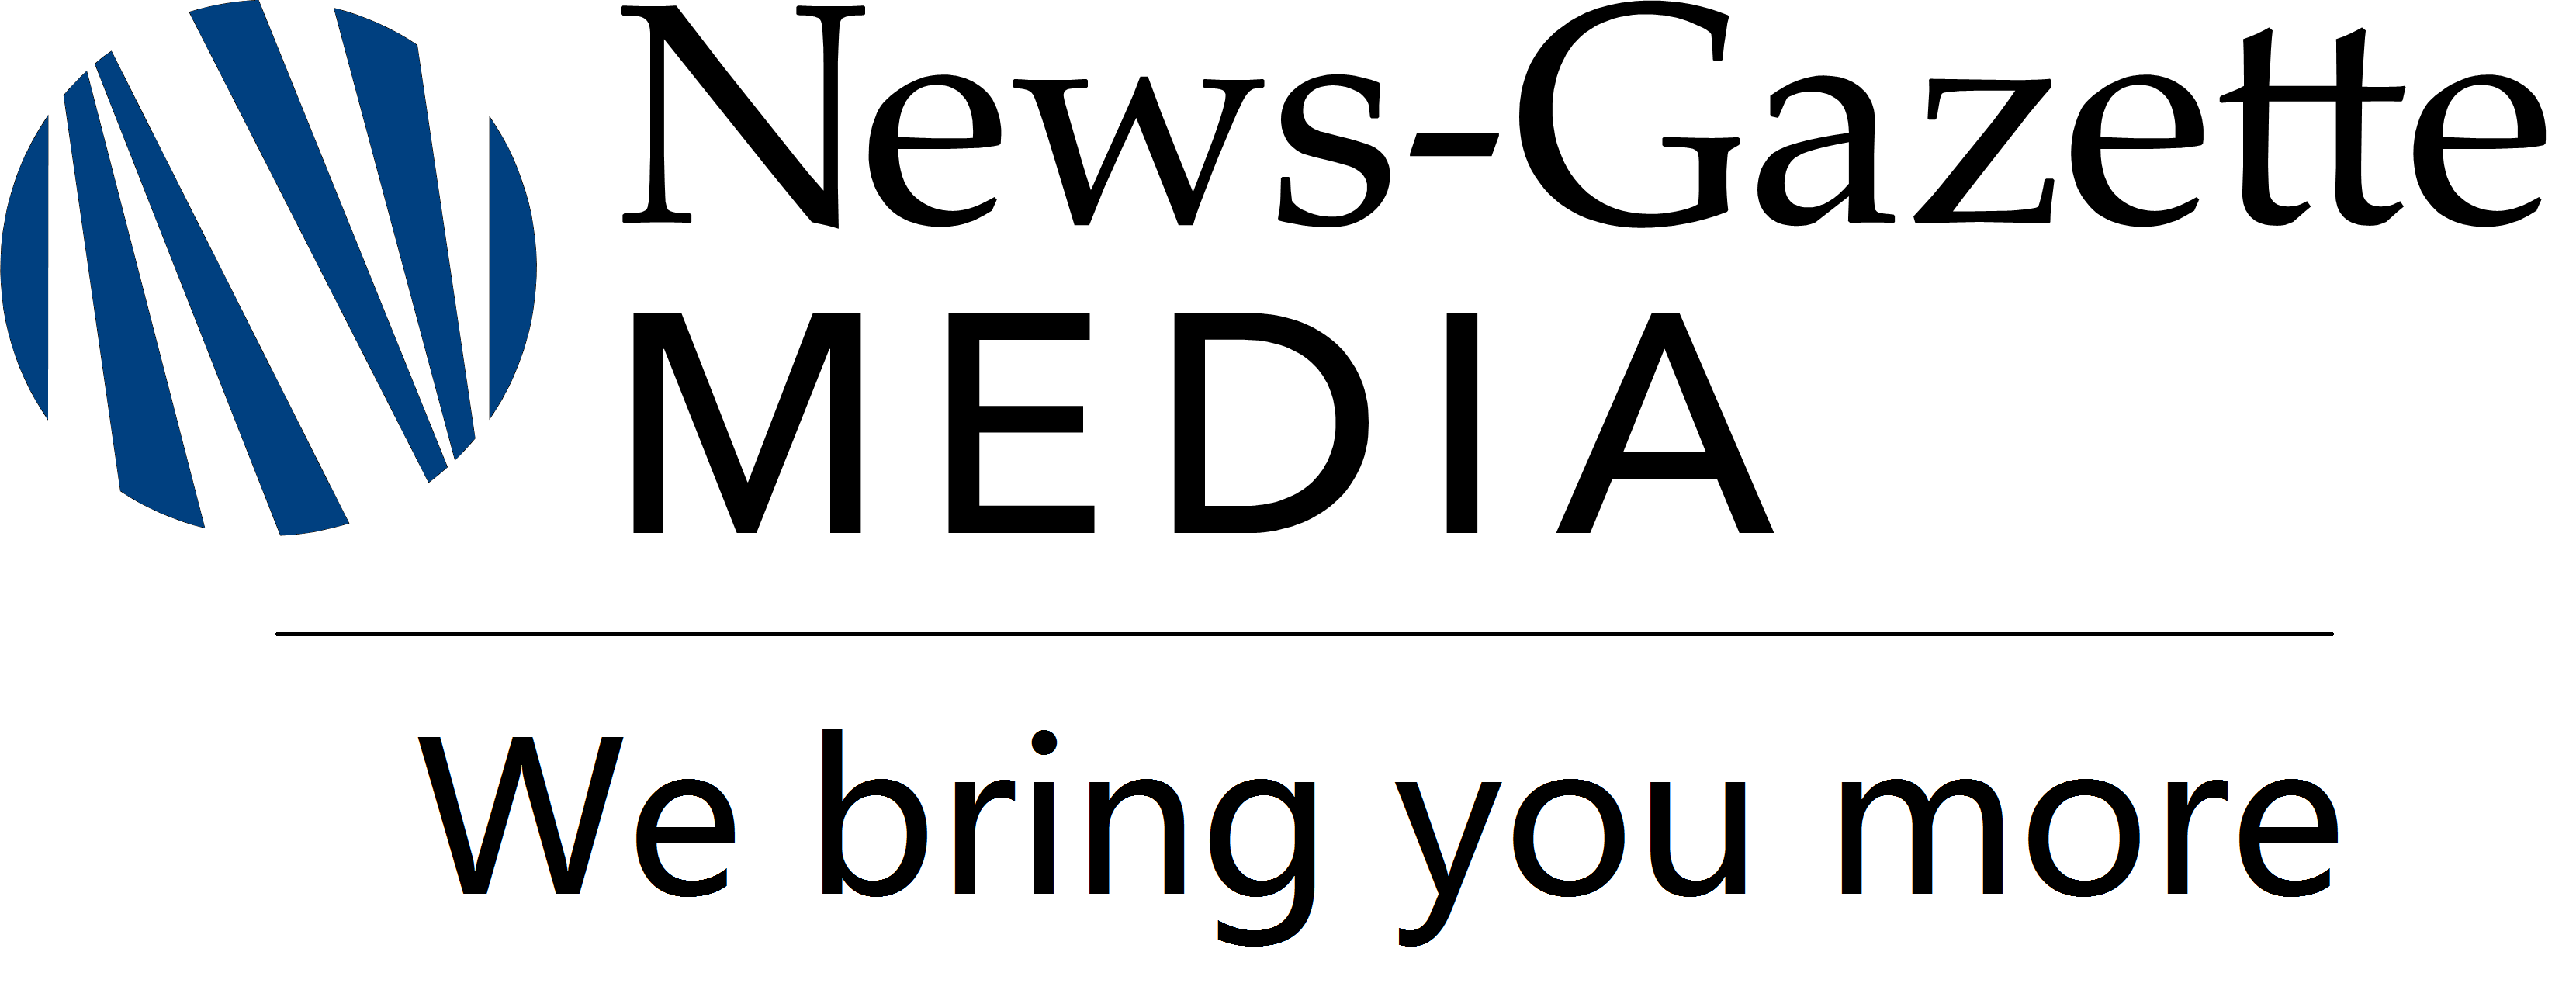 News-Gazette Media Logo